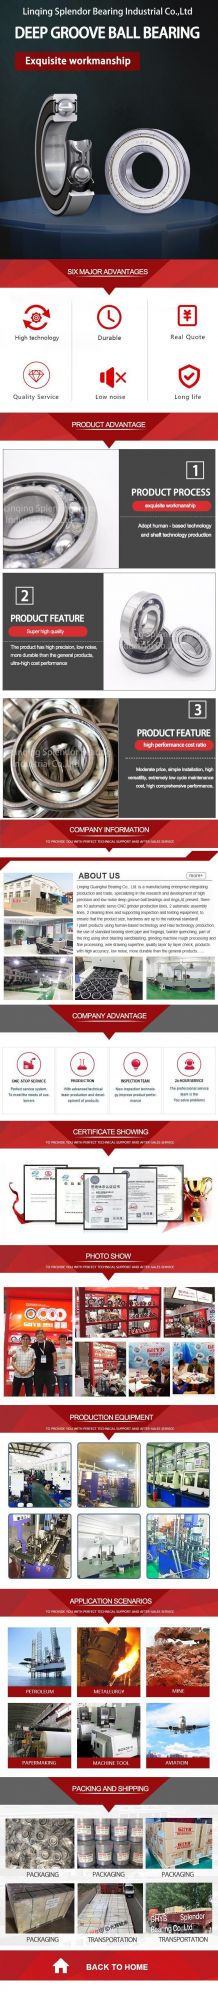 China Factory Distributor Supplier of Deep Groove Ball Bearings for Motors, Compressors, Alternators 6211-2rz/P6/Z2V2